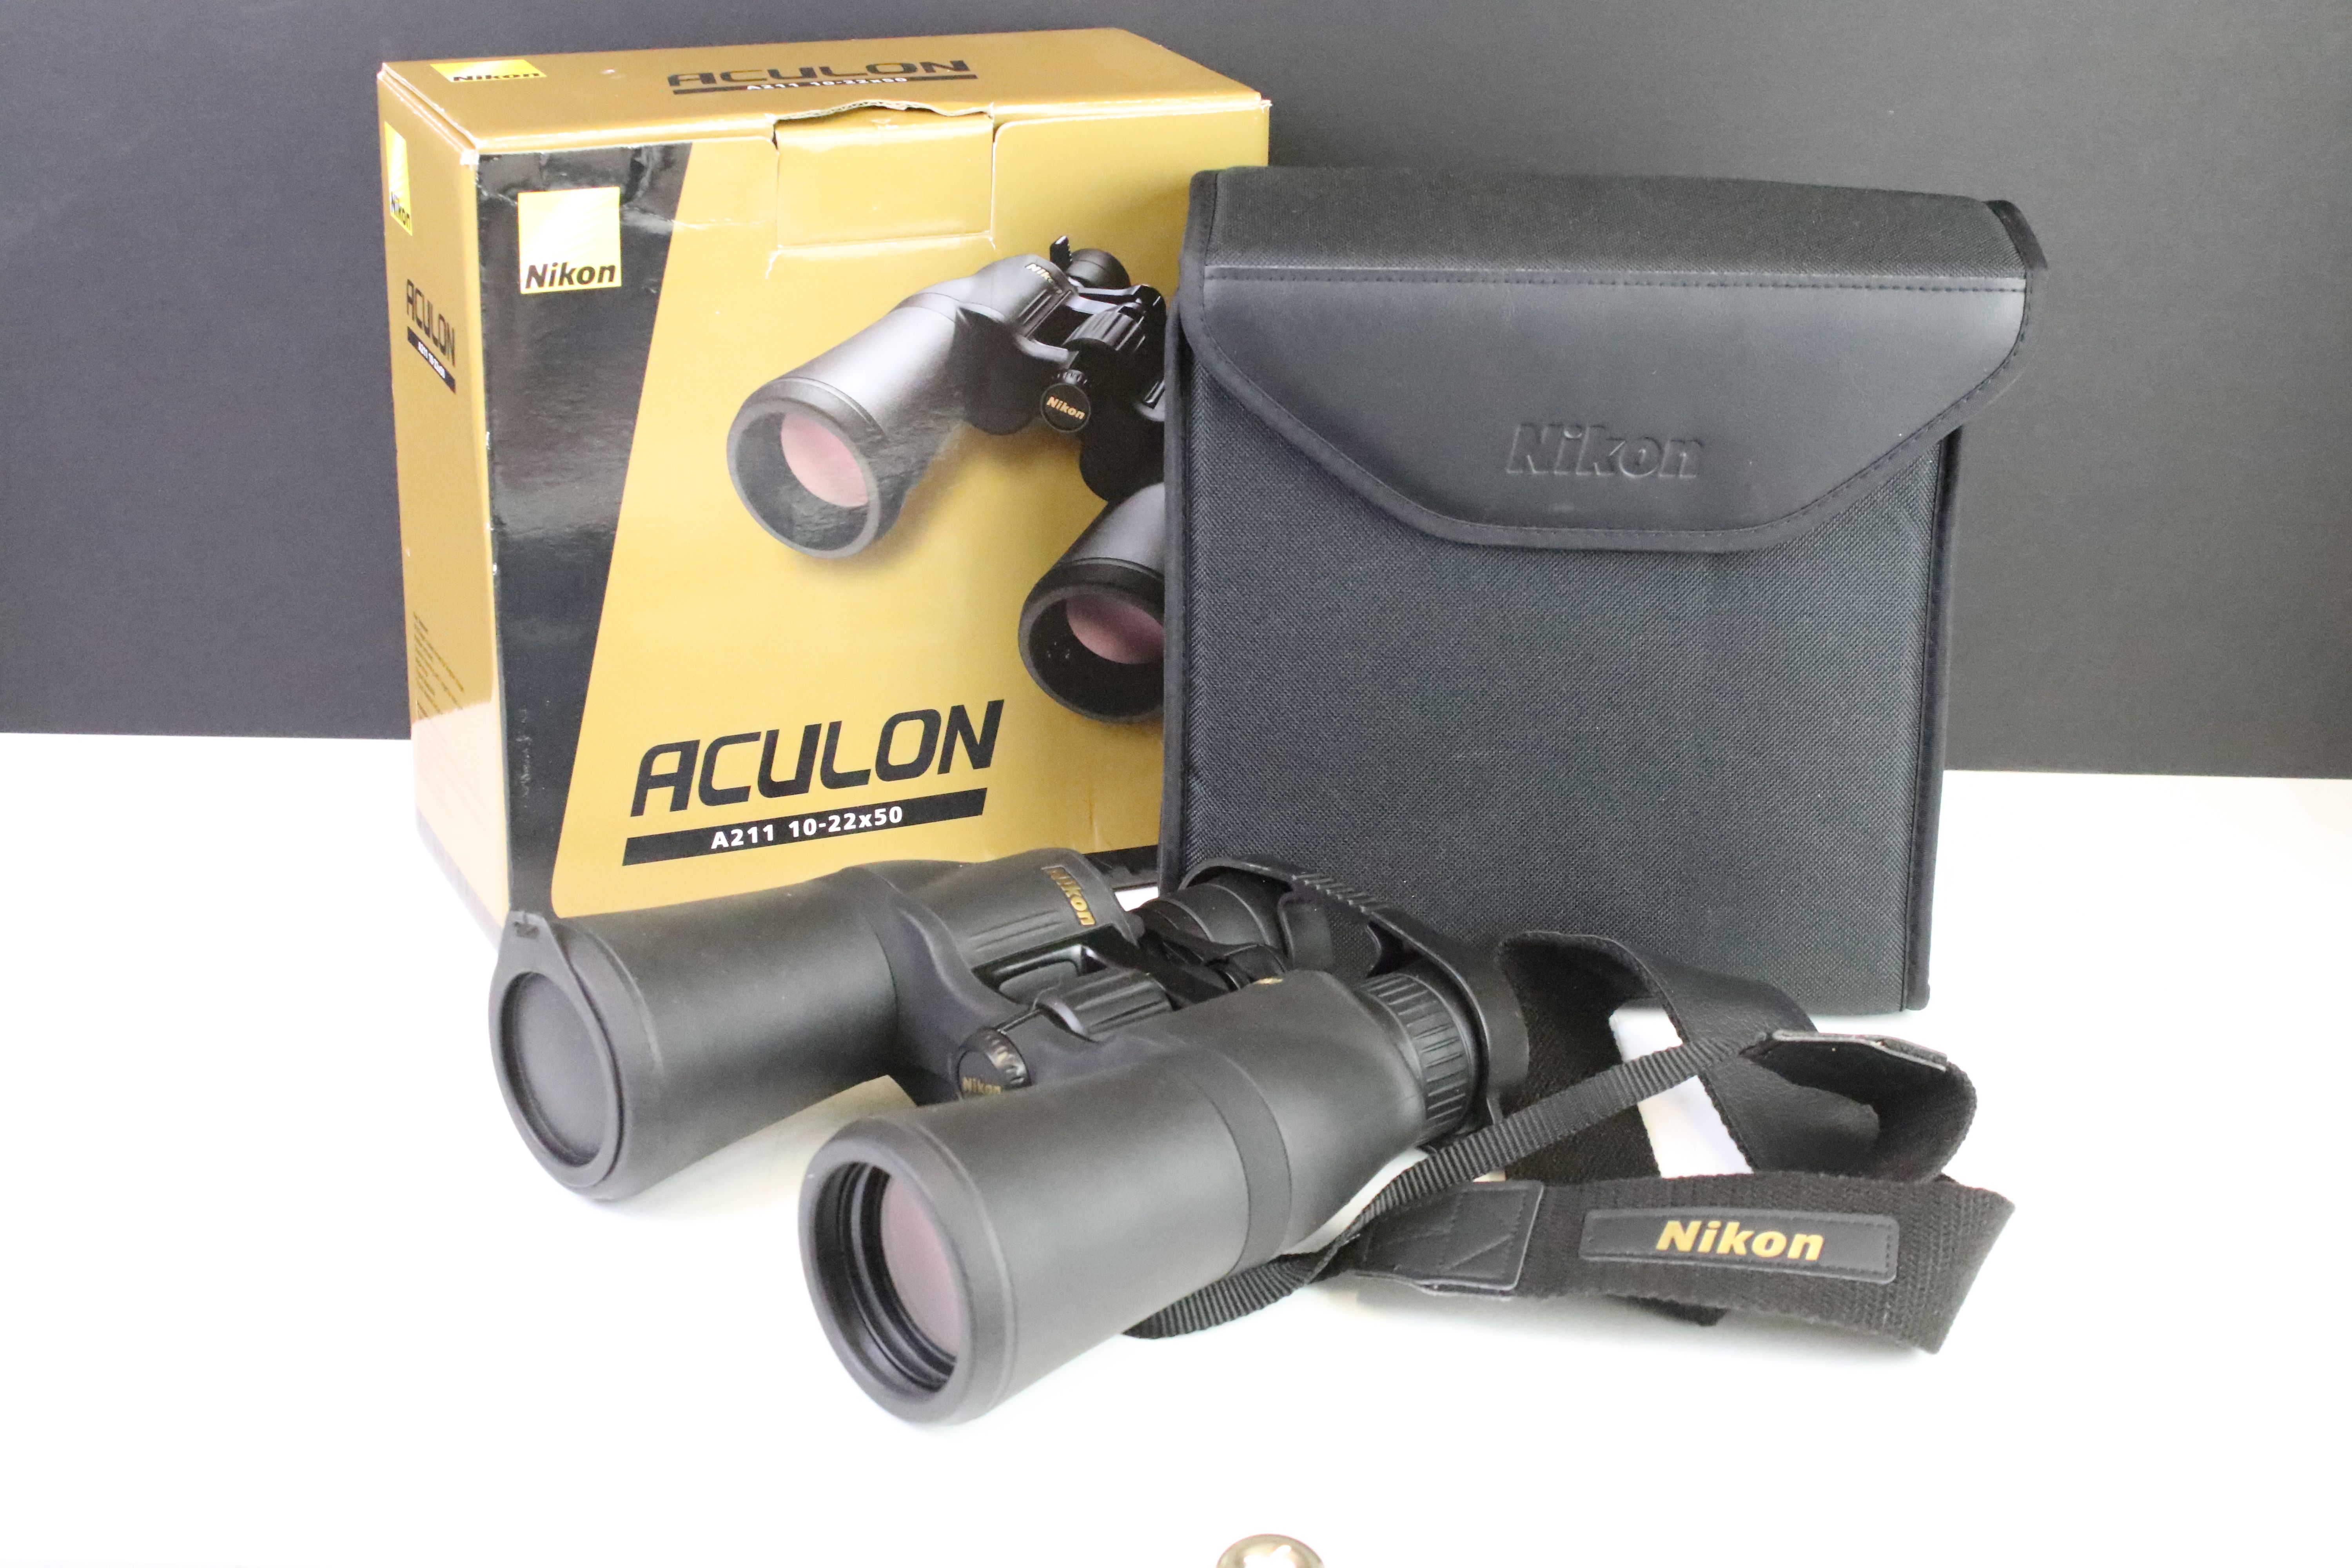 A set of Nikon Aculon A211 10-22x50 binoculars with original case and box.